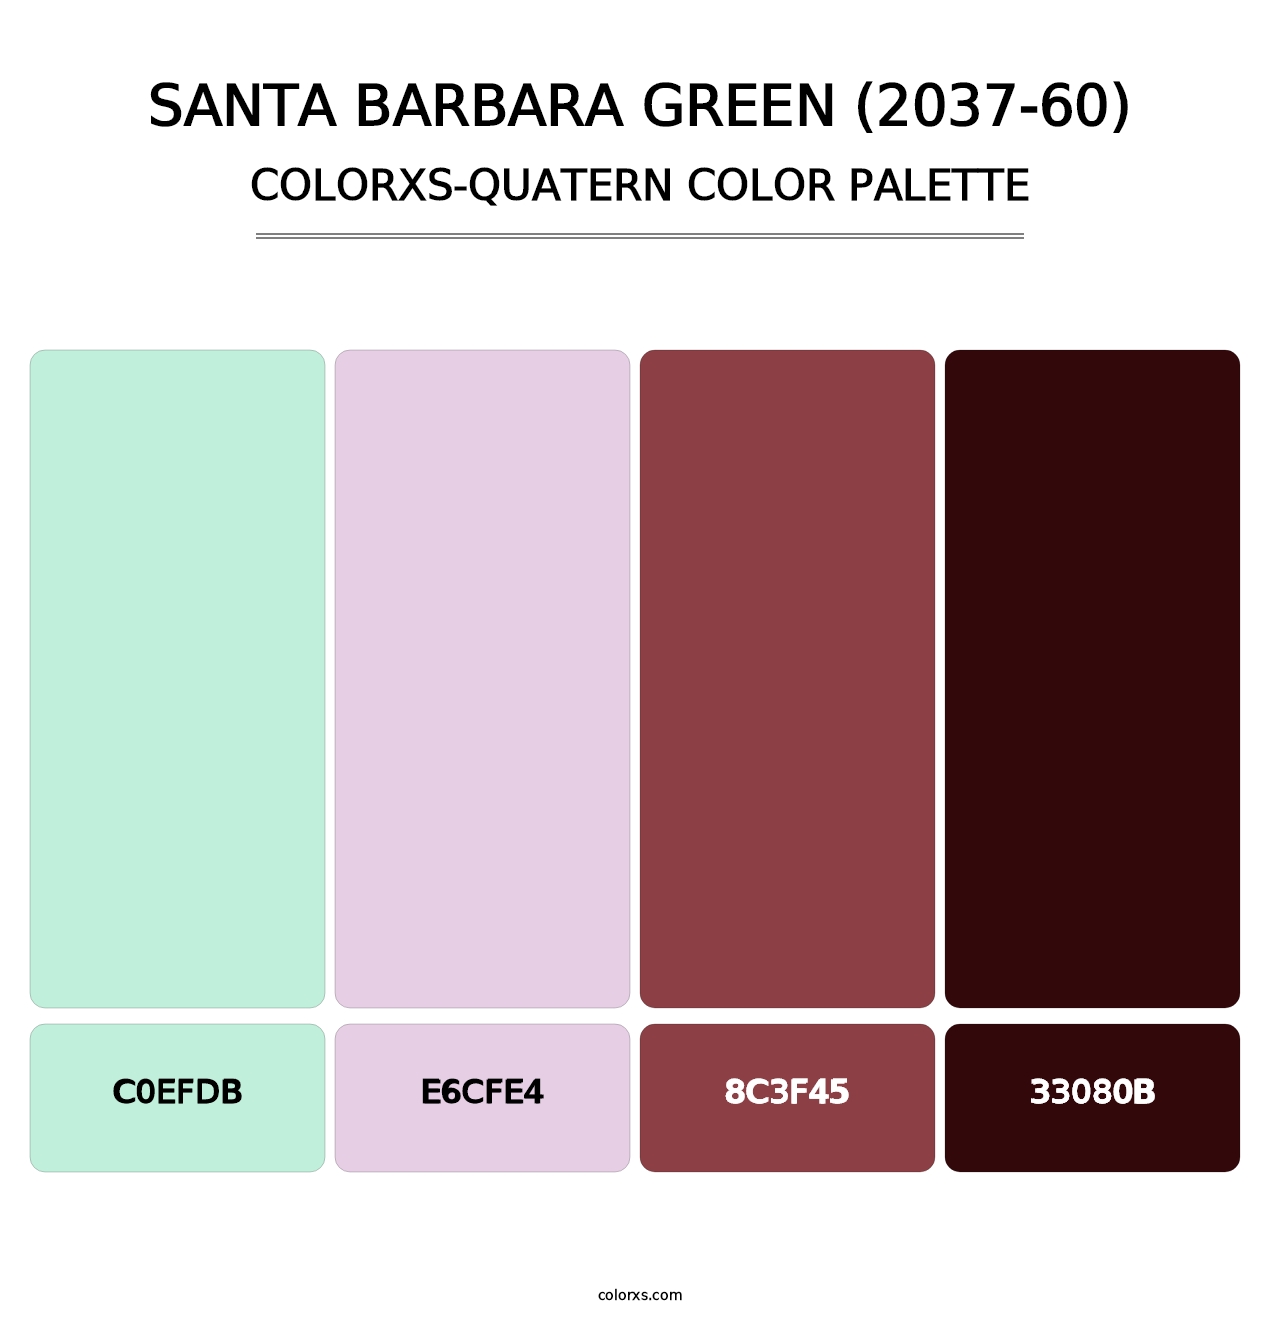 Santa Barbara Green (2037-60) - Colorxs Quatern Palette